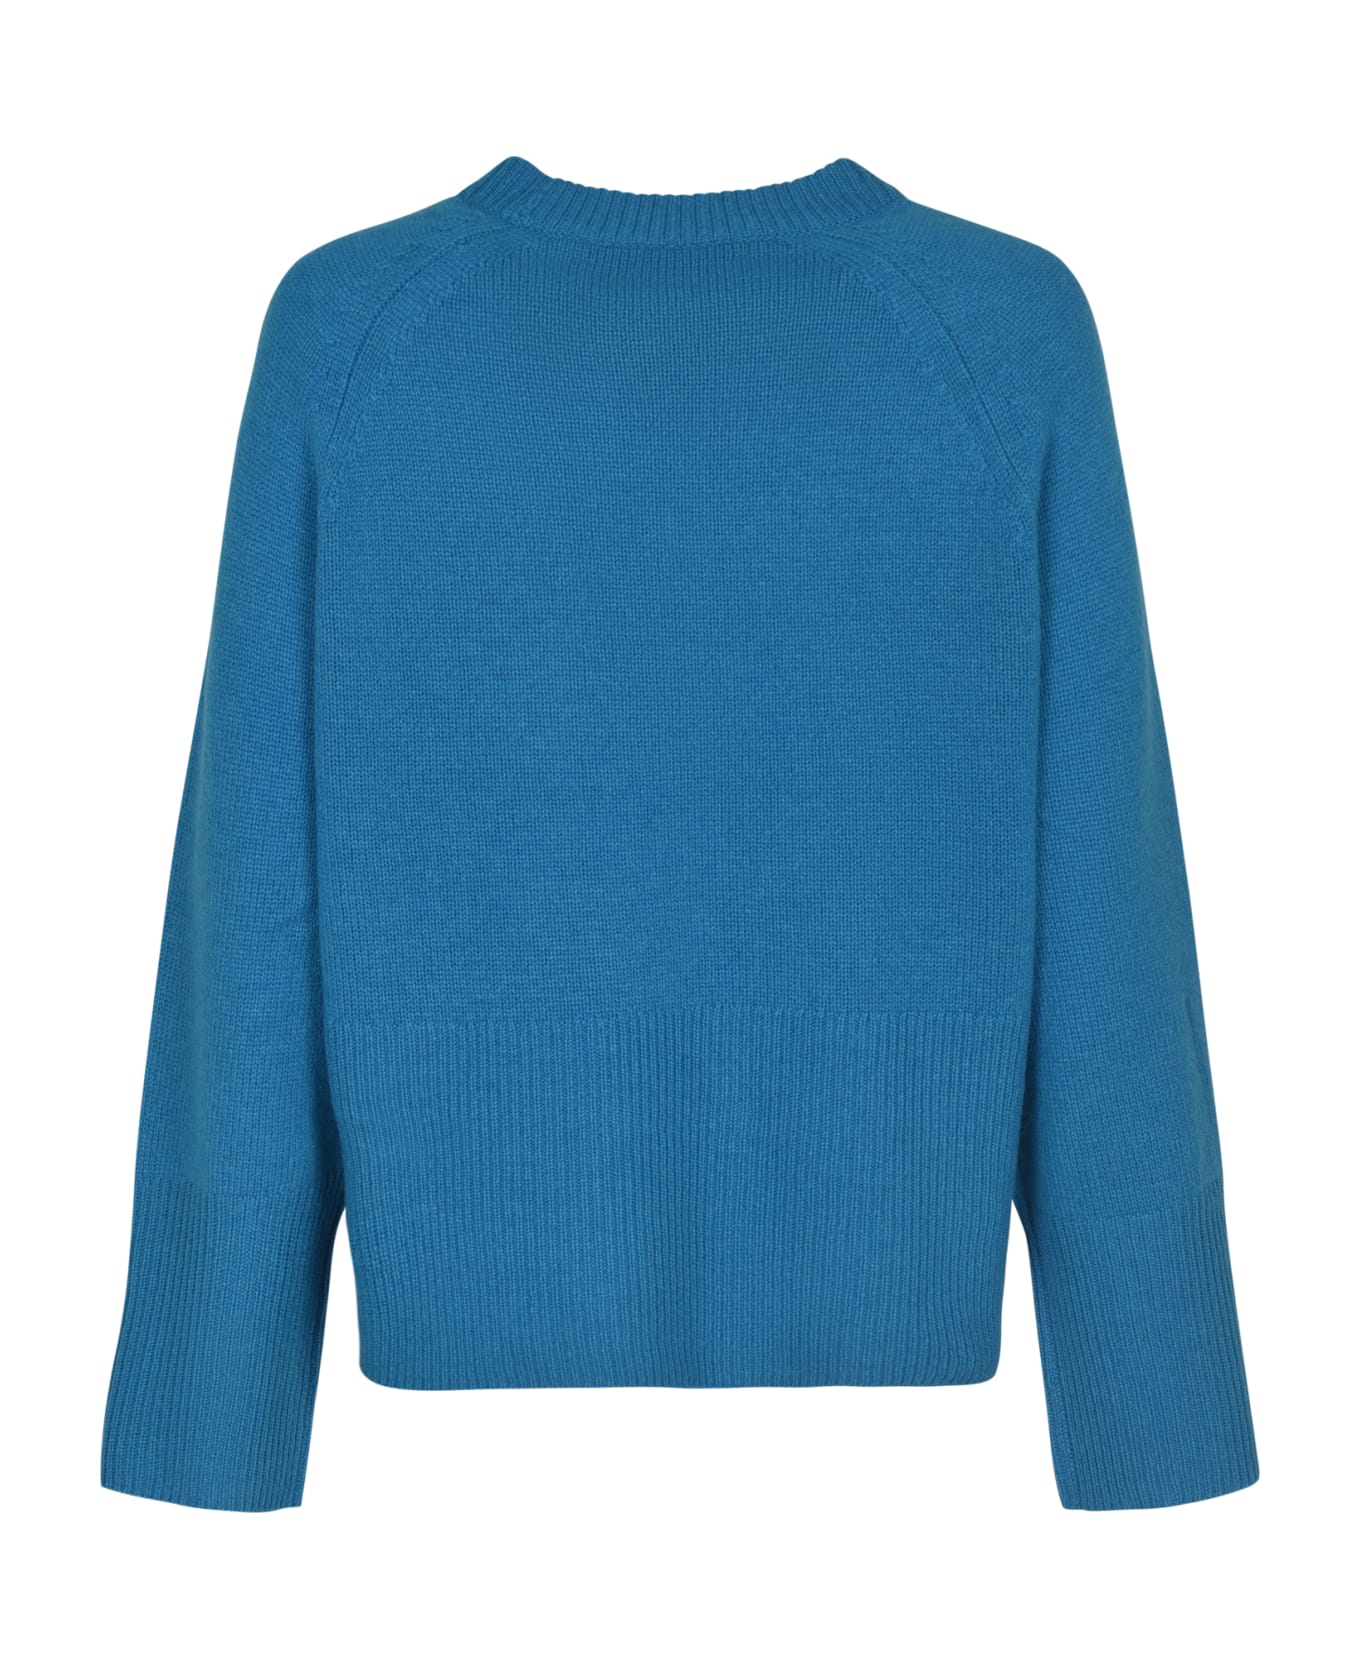 360Cashmere Rib Knit Sweater - Turquoise